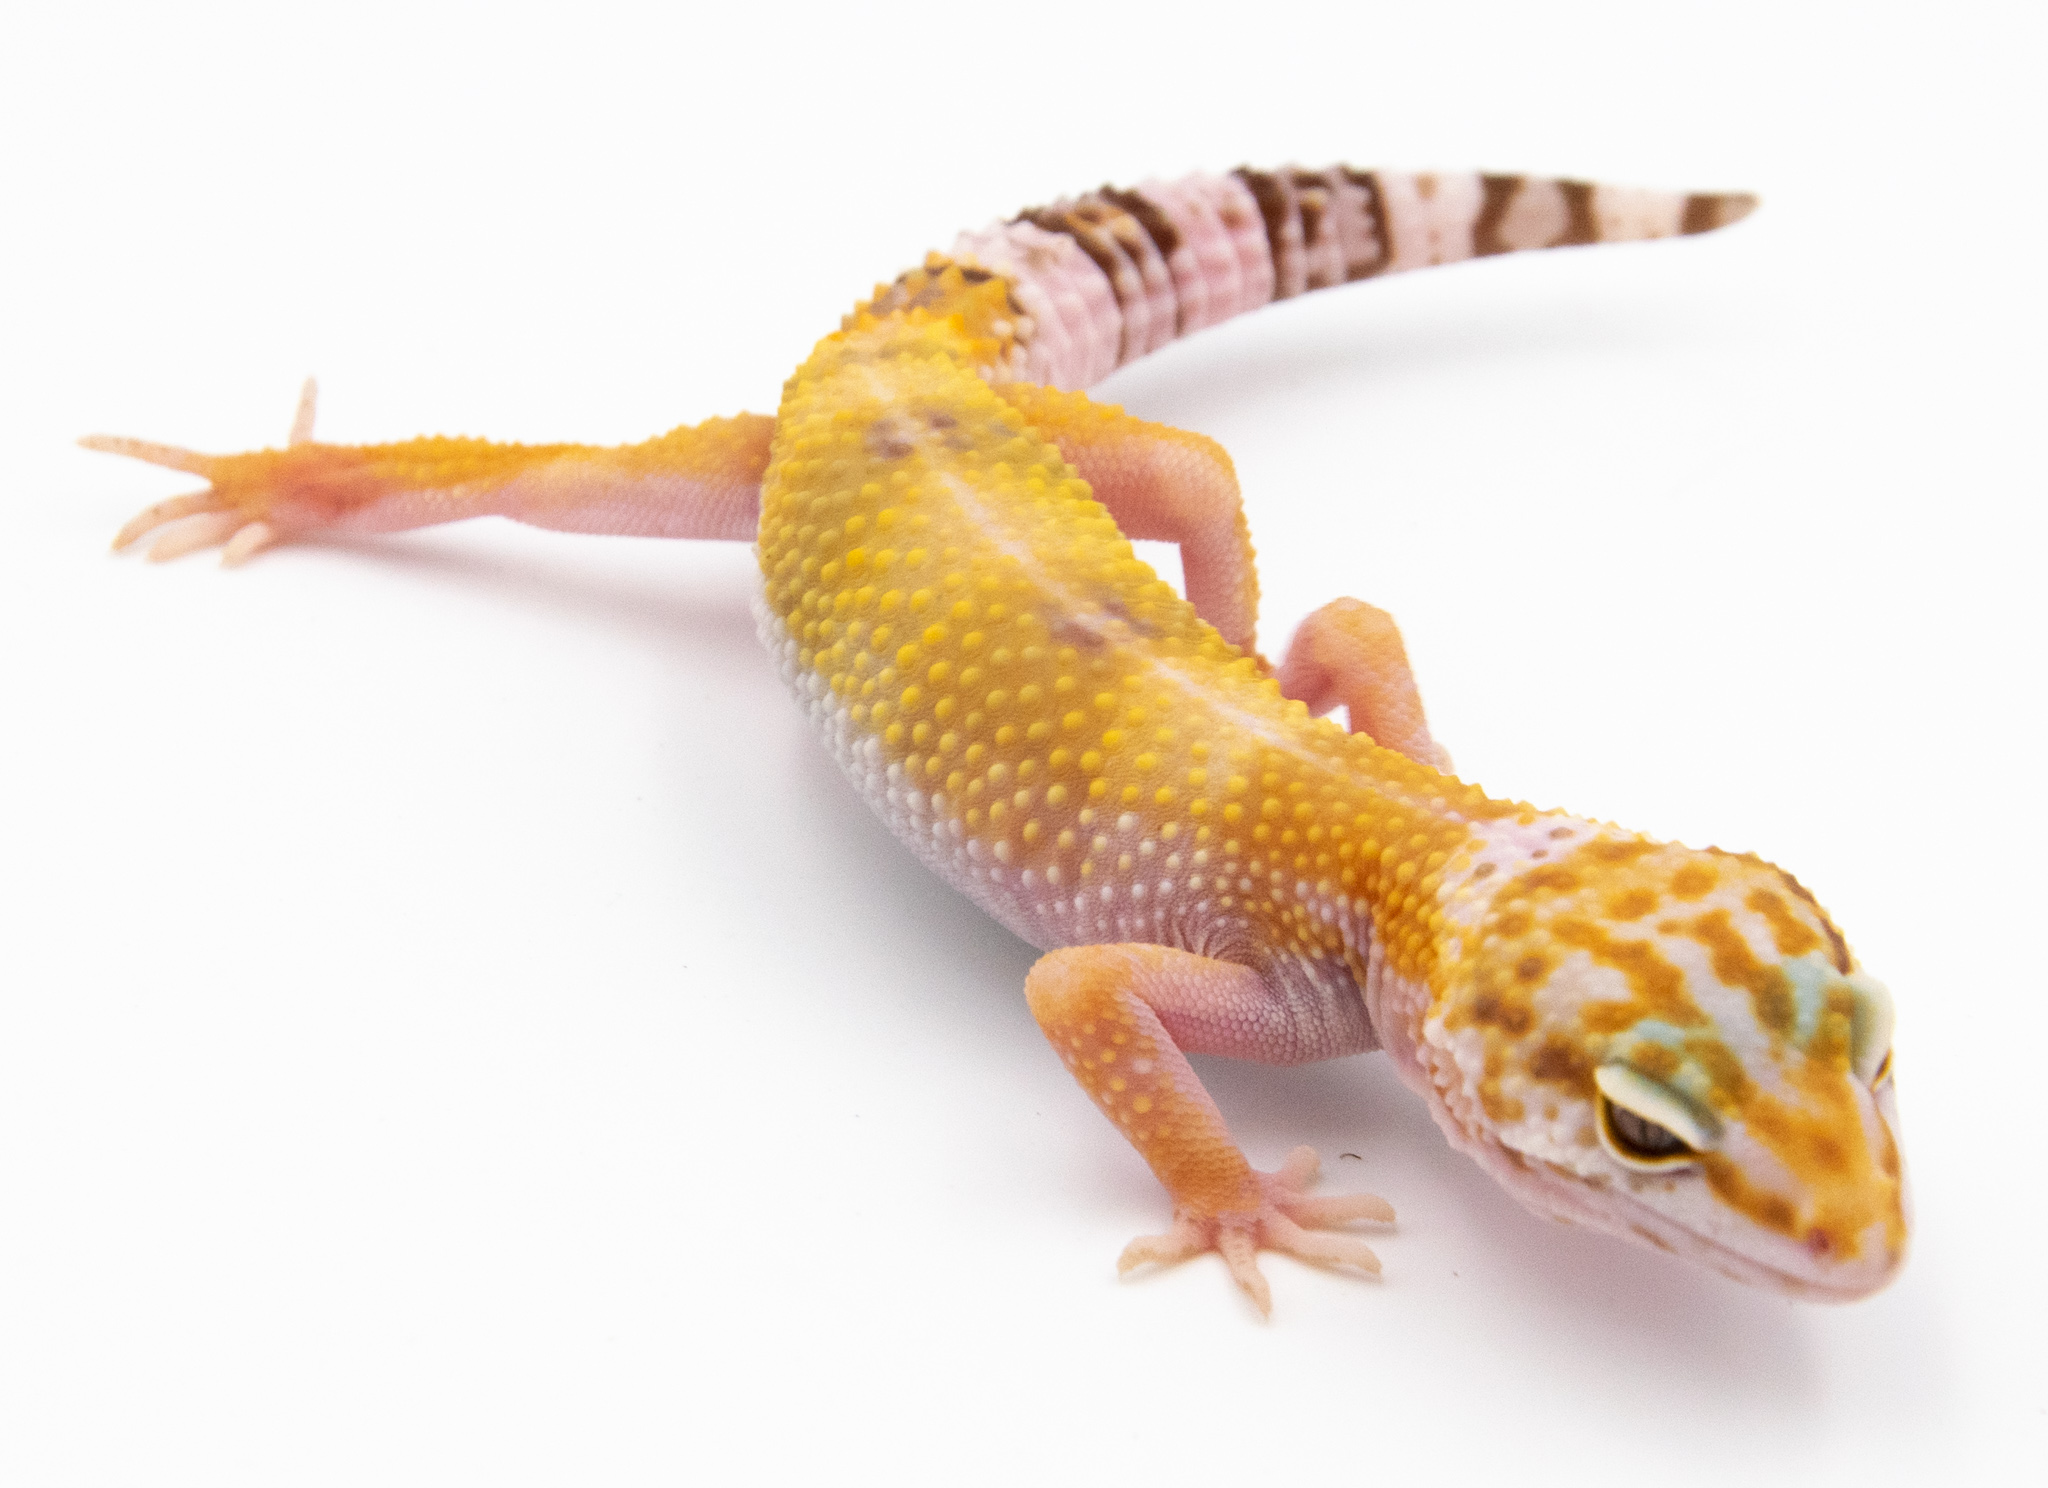 EJ04 - Gecko Léopard - Eublepharis Macularius Tangerine Tremper - non sexé - NC 2021